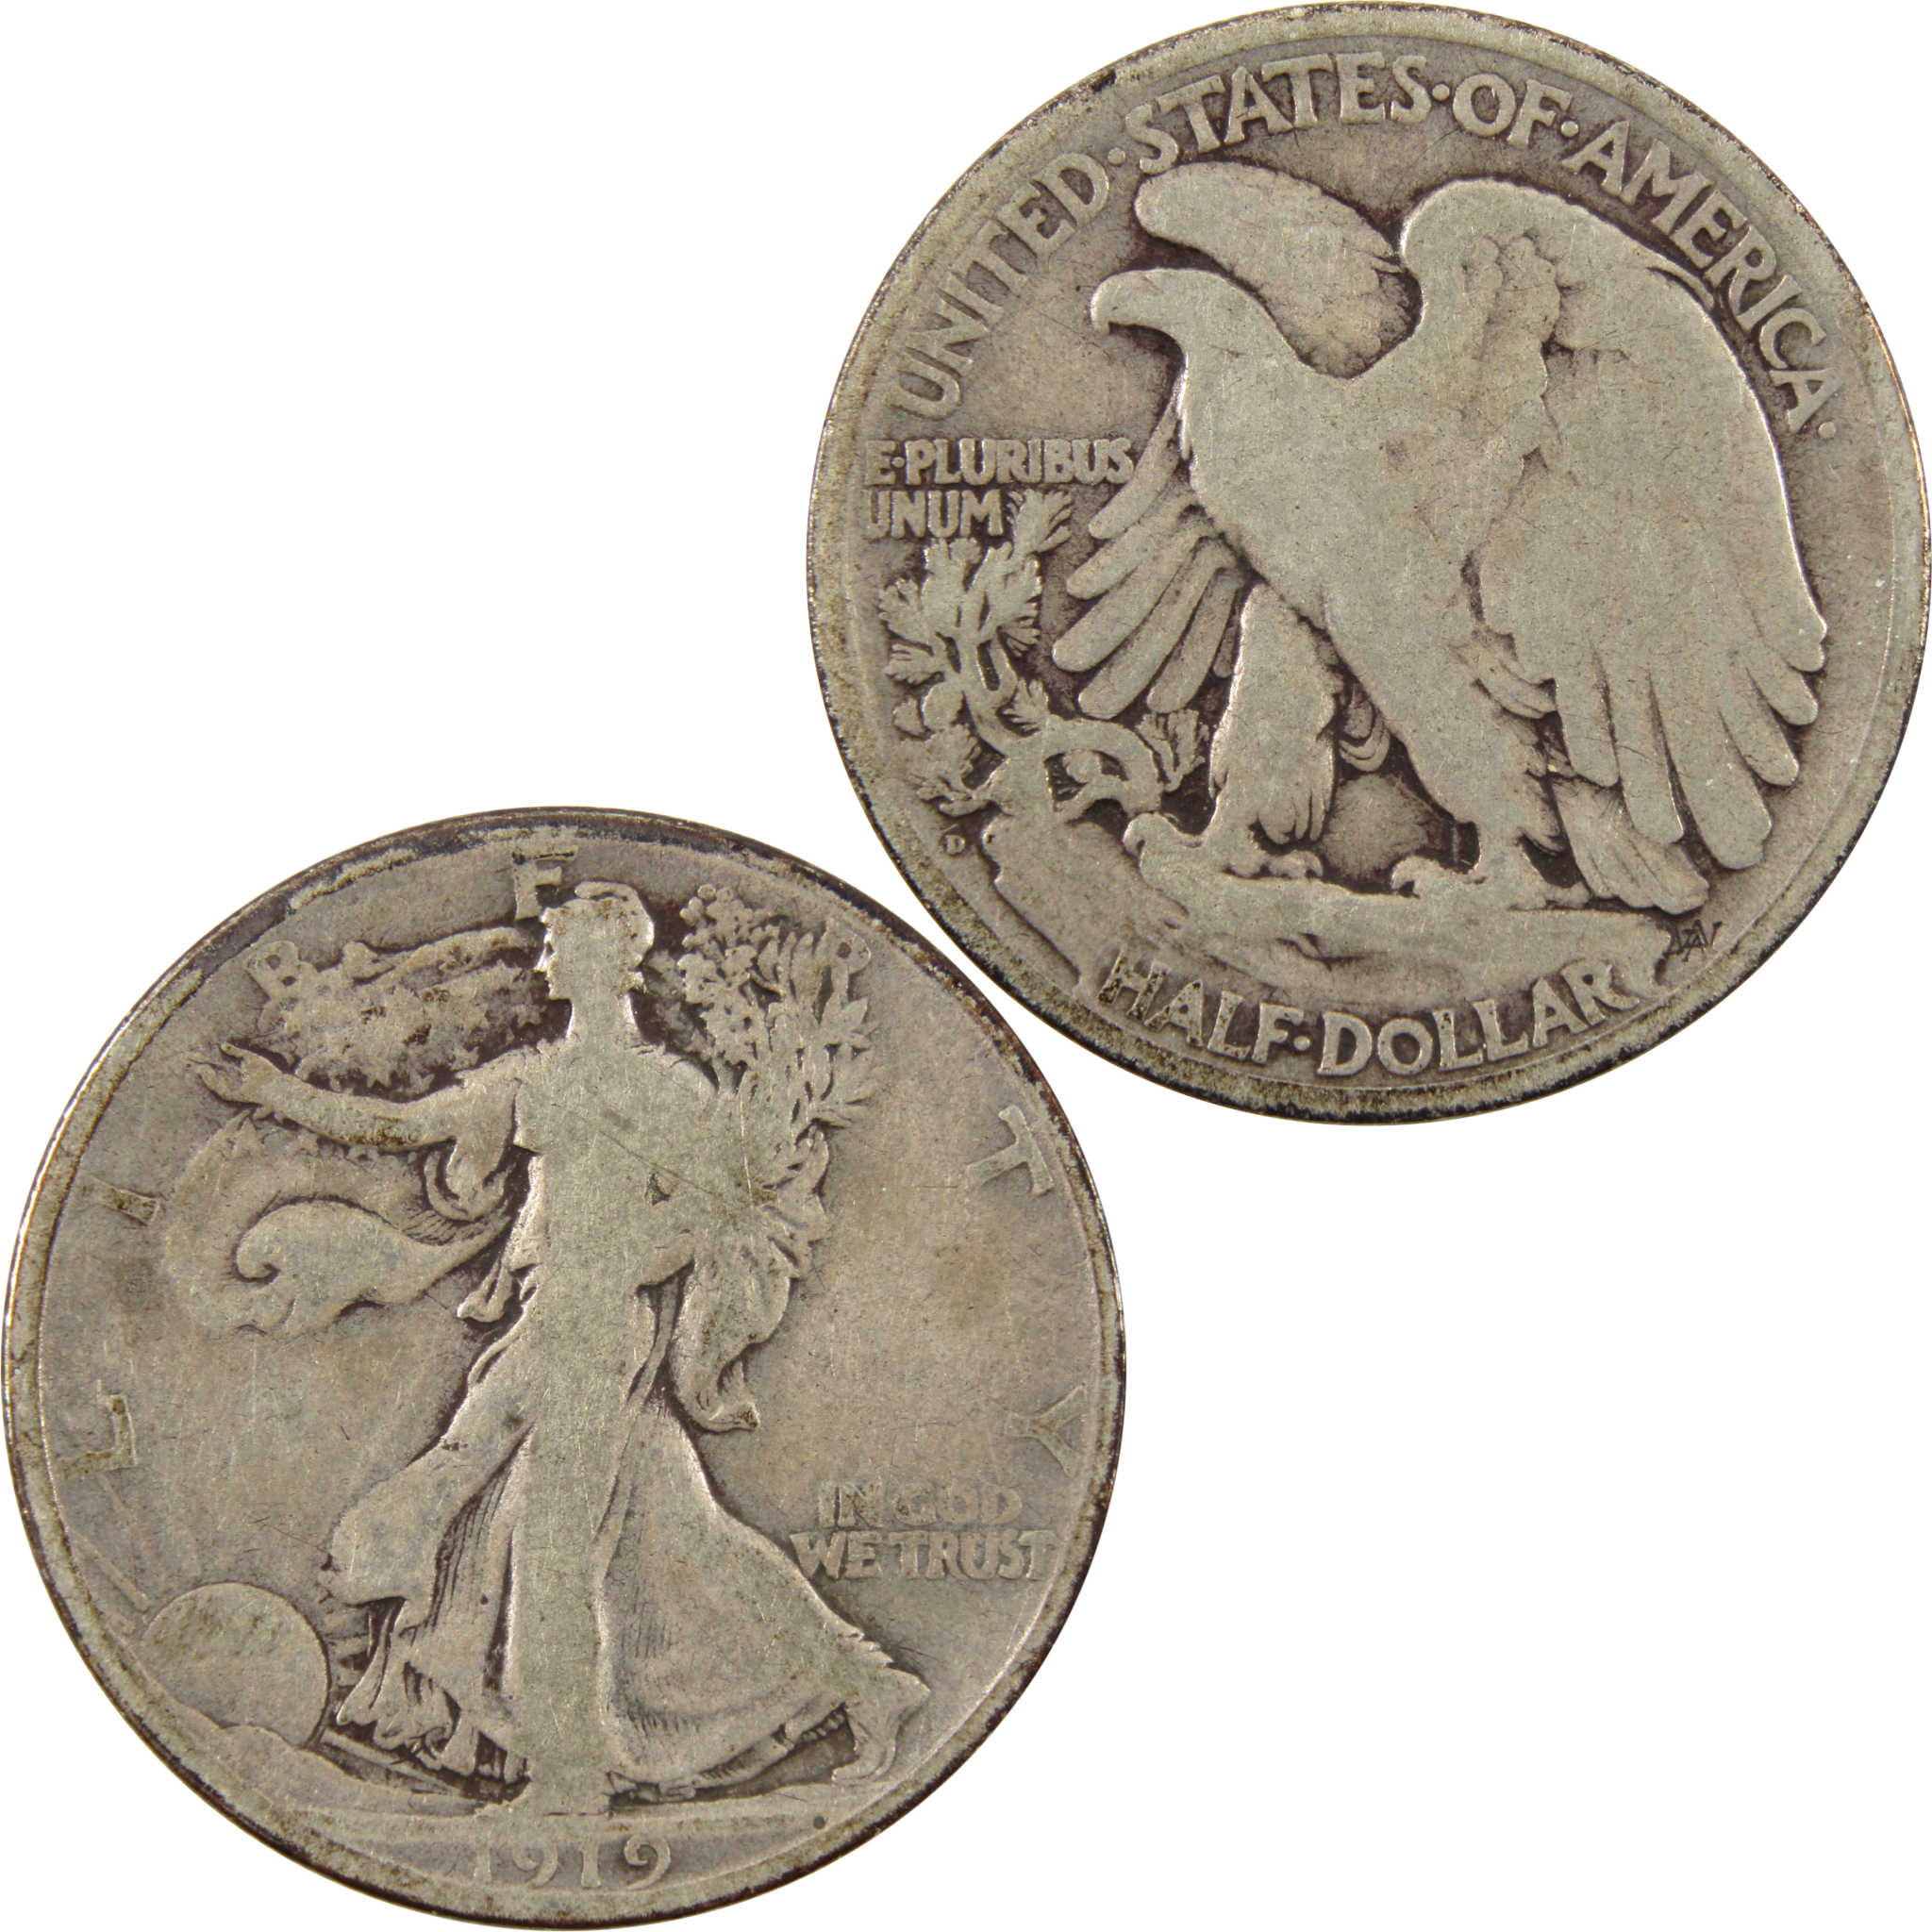 1919 D Liberty Walking Half Dollar VG Very Good 90% Silver SKU:I10739